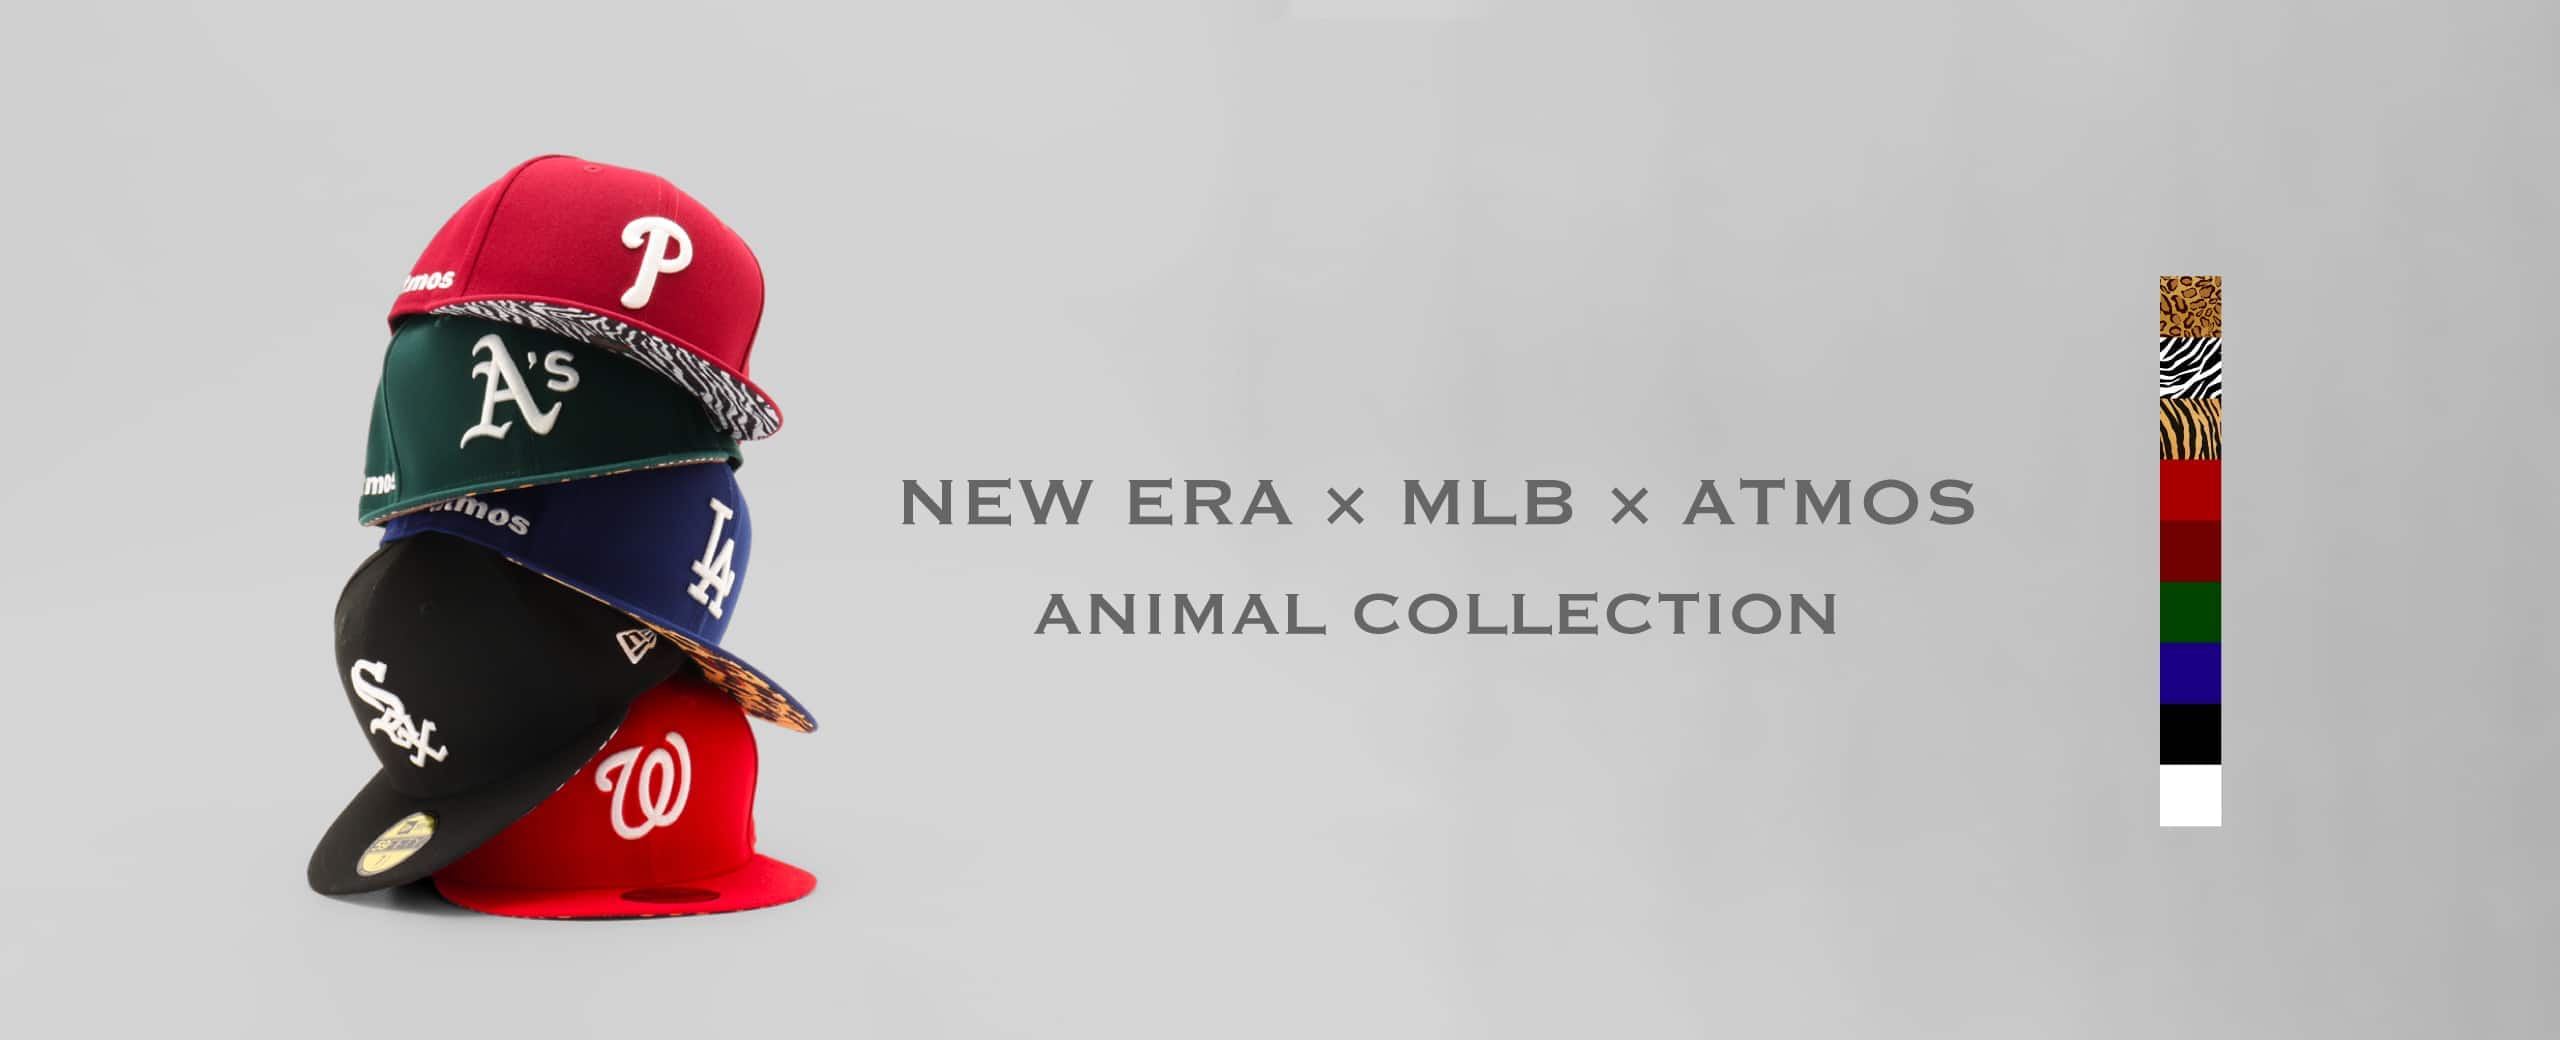 "NEW ERA x MLB x atmos Animal Collection | アンダーバイザーにアニマル柄を落とし込んだエクスクルーシブなアイテム。"